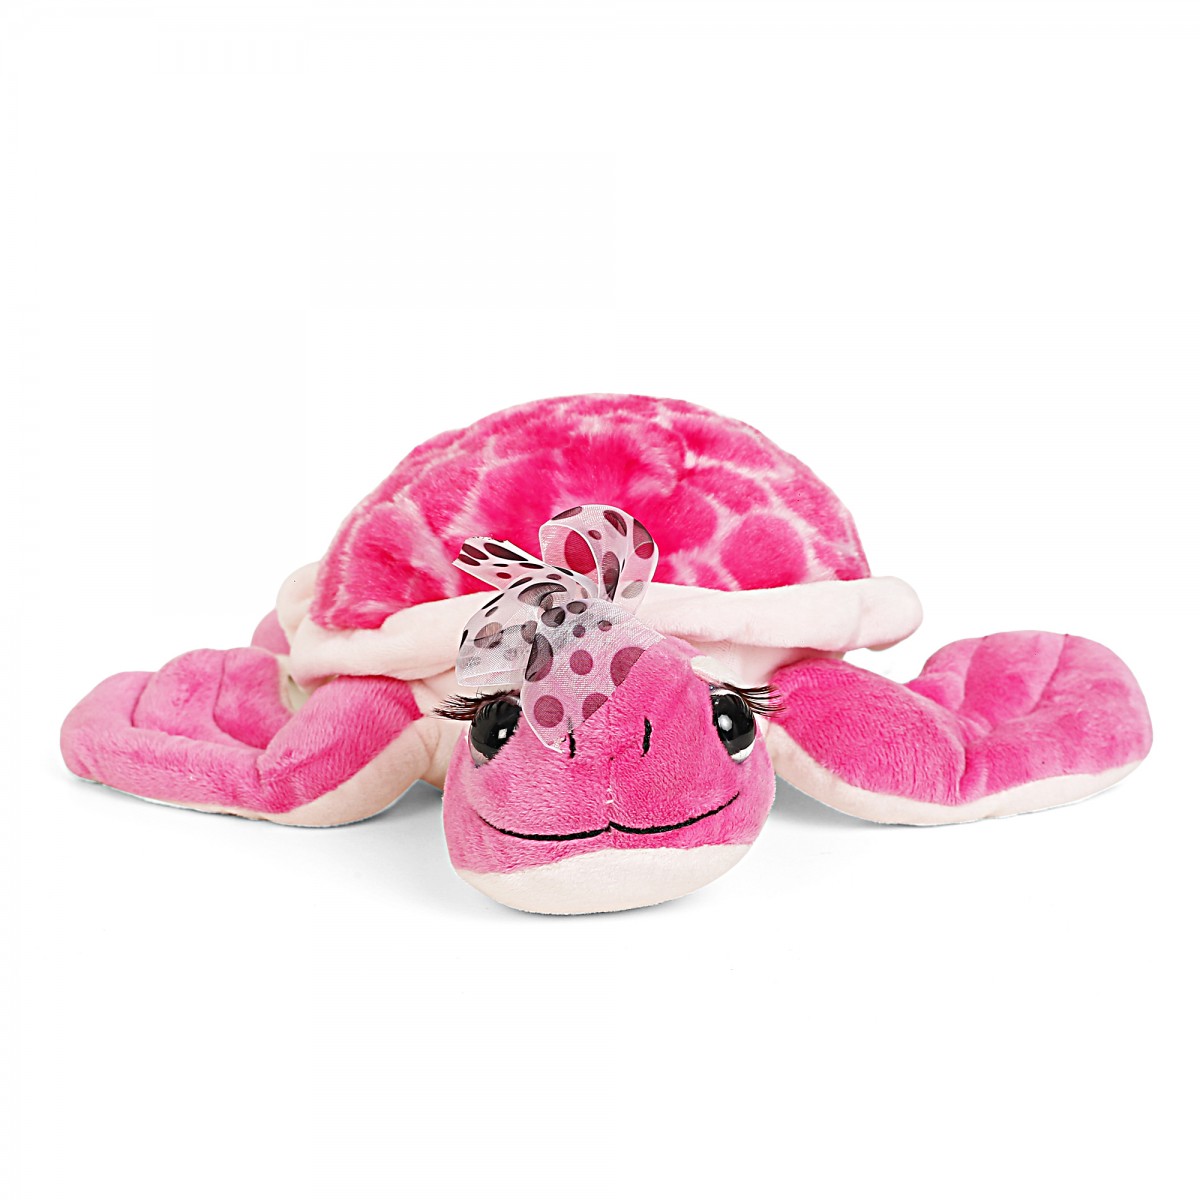 Fuzzbuzz Sea Turtle, Soft Toys for Kids, Pink, 1Y+